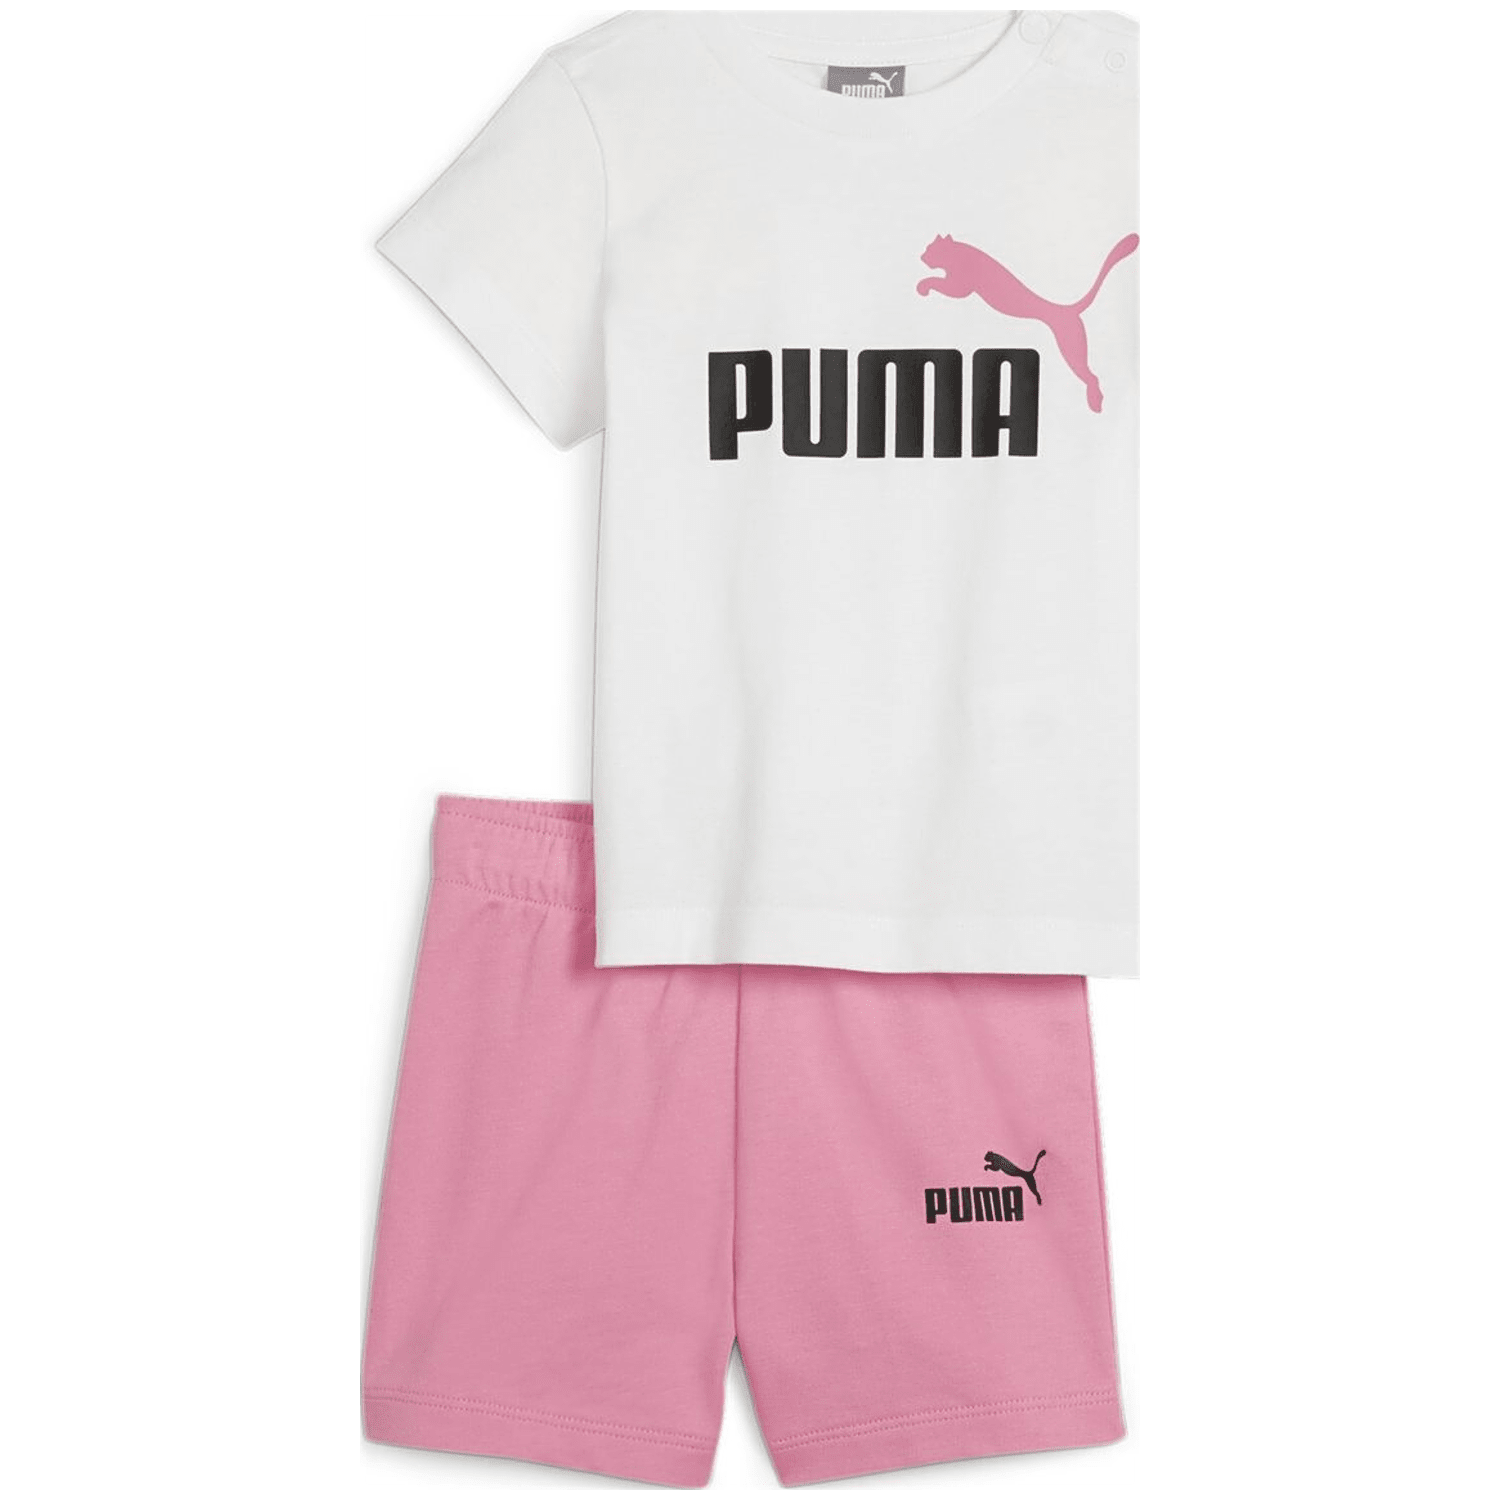 Puma Minicats Tee & Set Kinder Jogginganzug